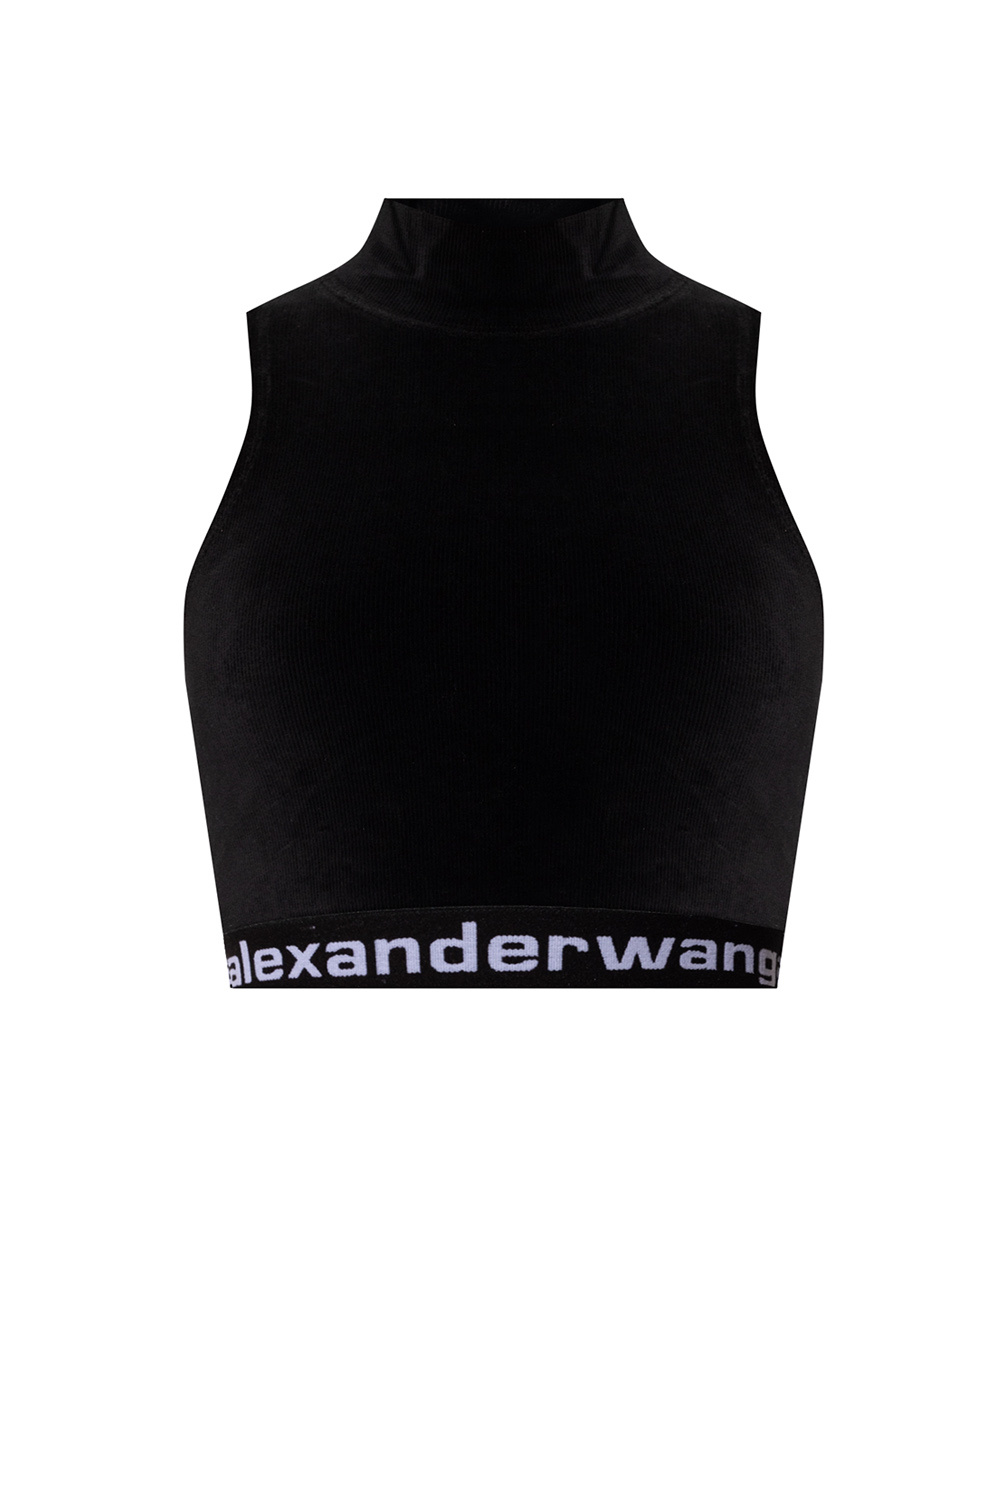 New - Alexander Wang Black Crop Top Bra